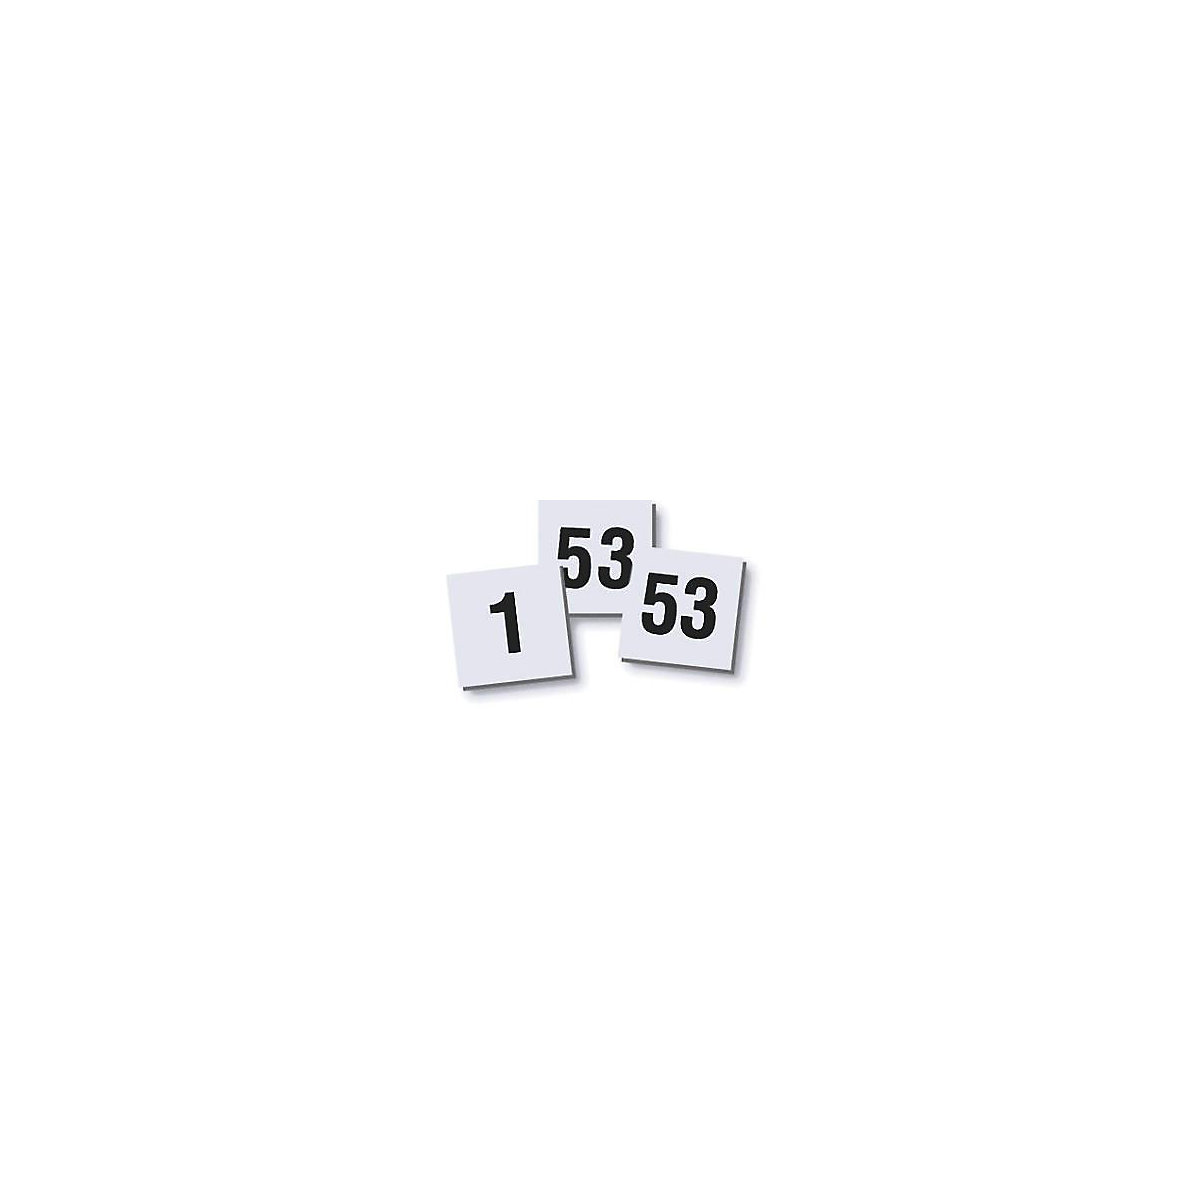 Conjunto de ímanes de números – magnetoplan, 10 x 10 mm, embalagem de 2 unid., números 1 – 53-2